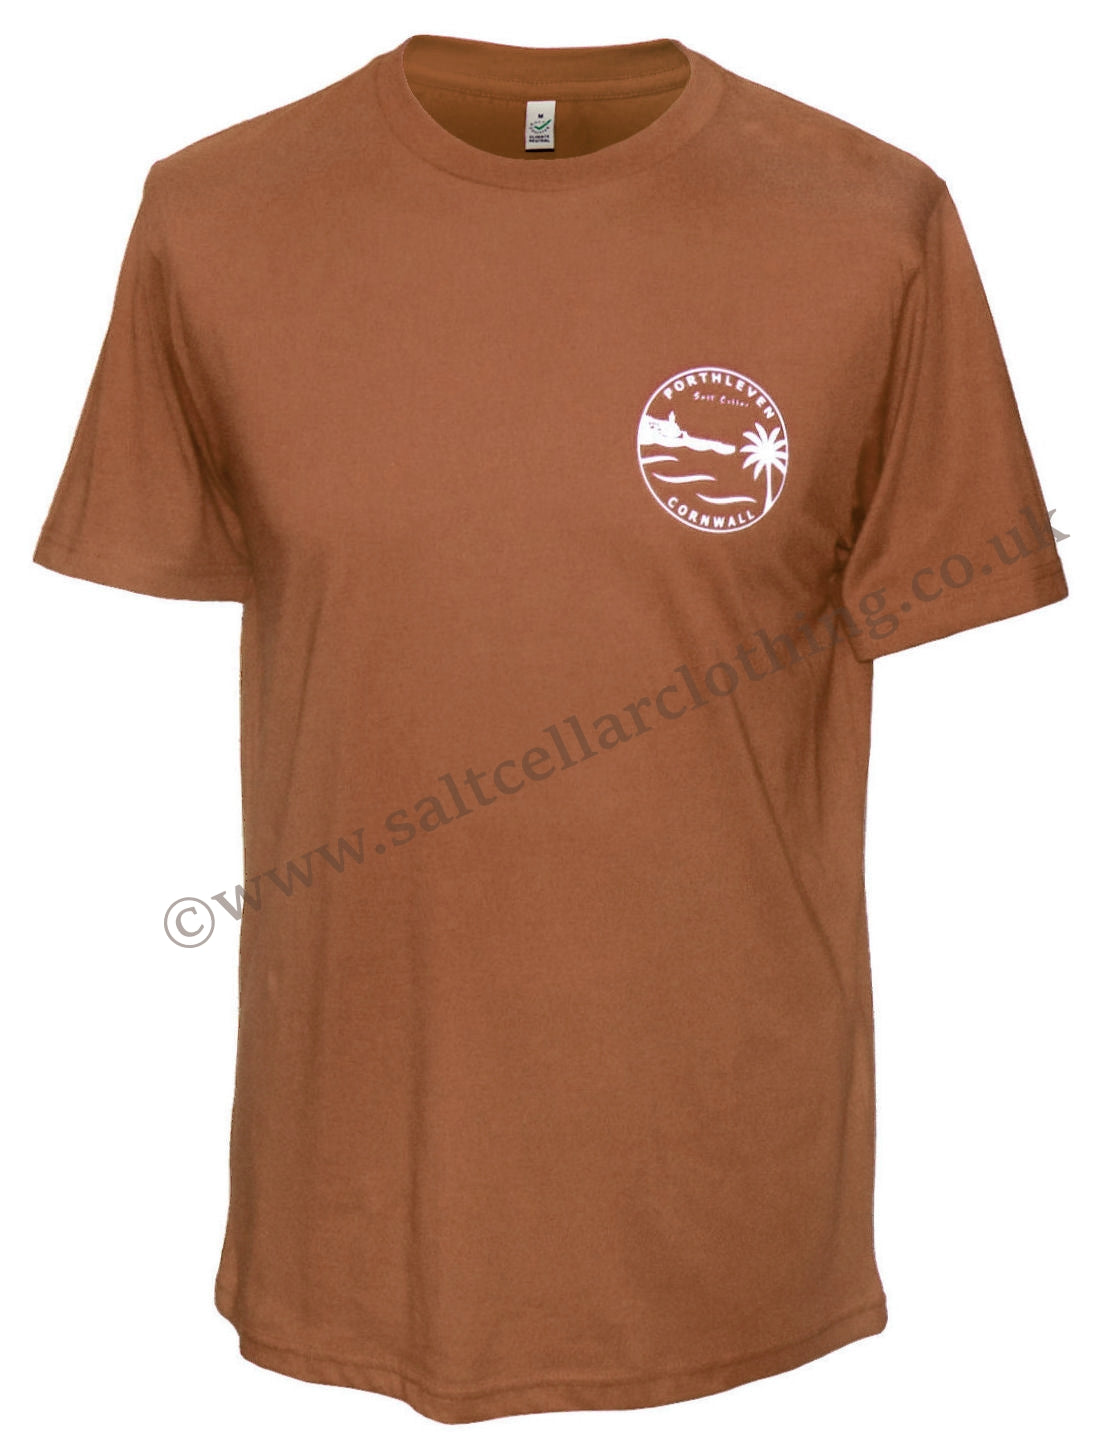 Salt Cellar Mens Porthleven, Cornwall Print T-Shirt - Burnt Orange